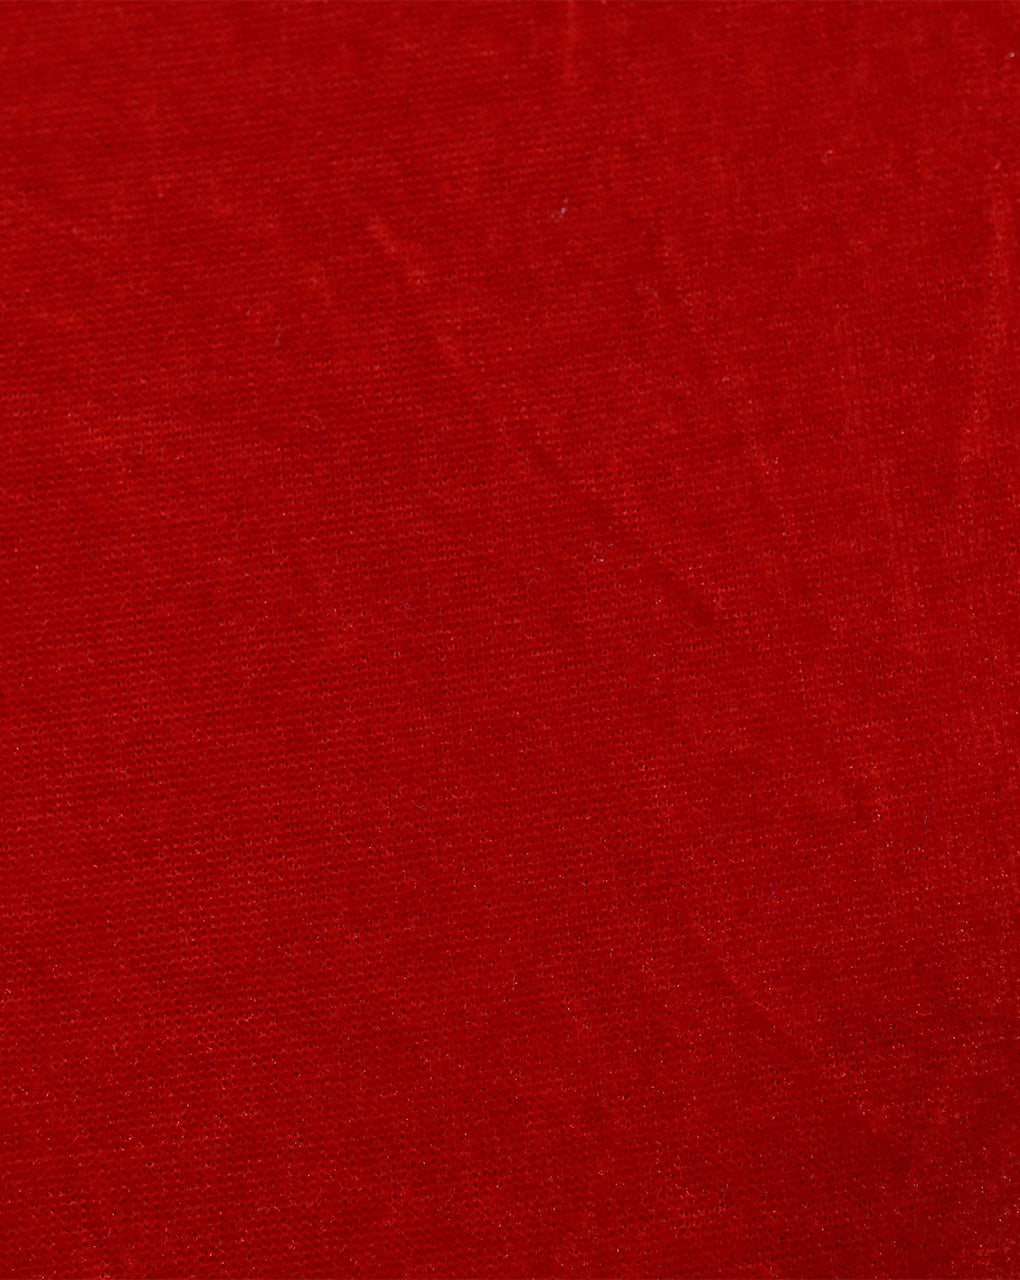 RED PLAIN VELVET LYCRA FABRIC ( WIDTH 58 INCHES )